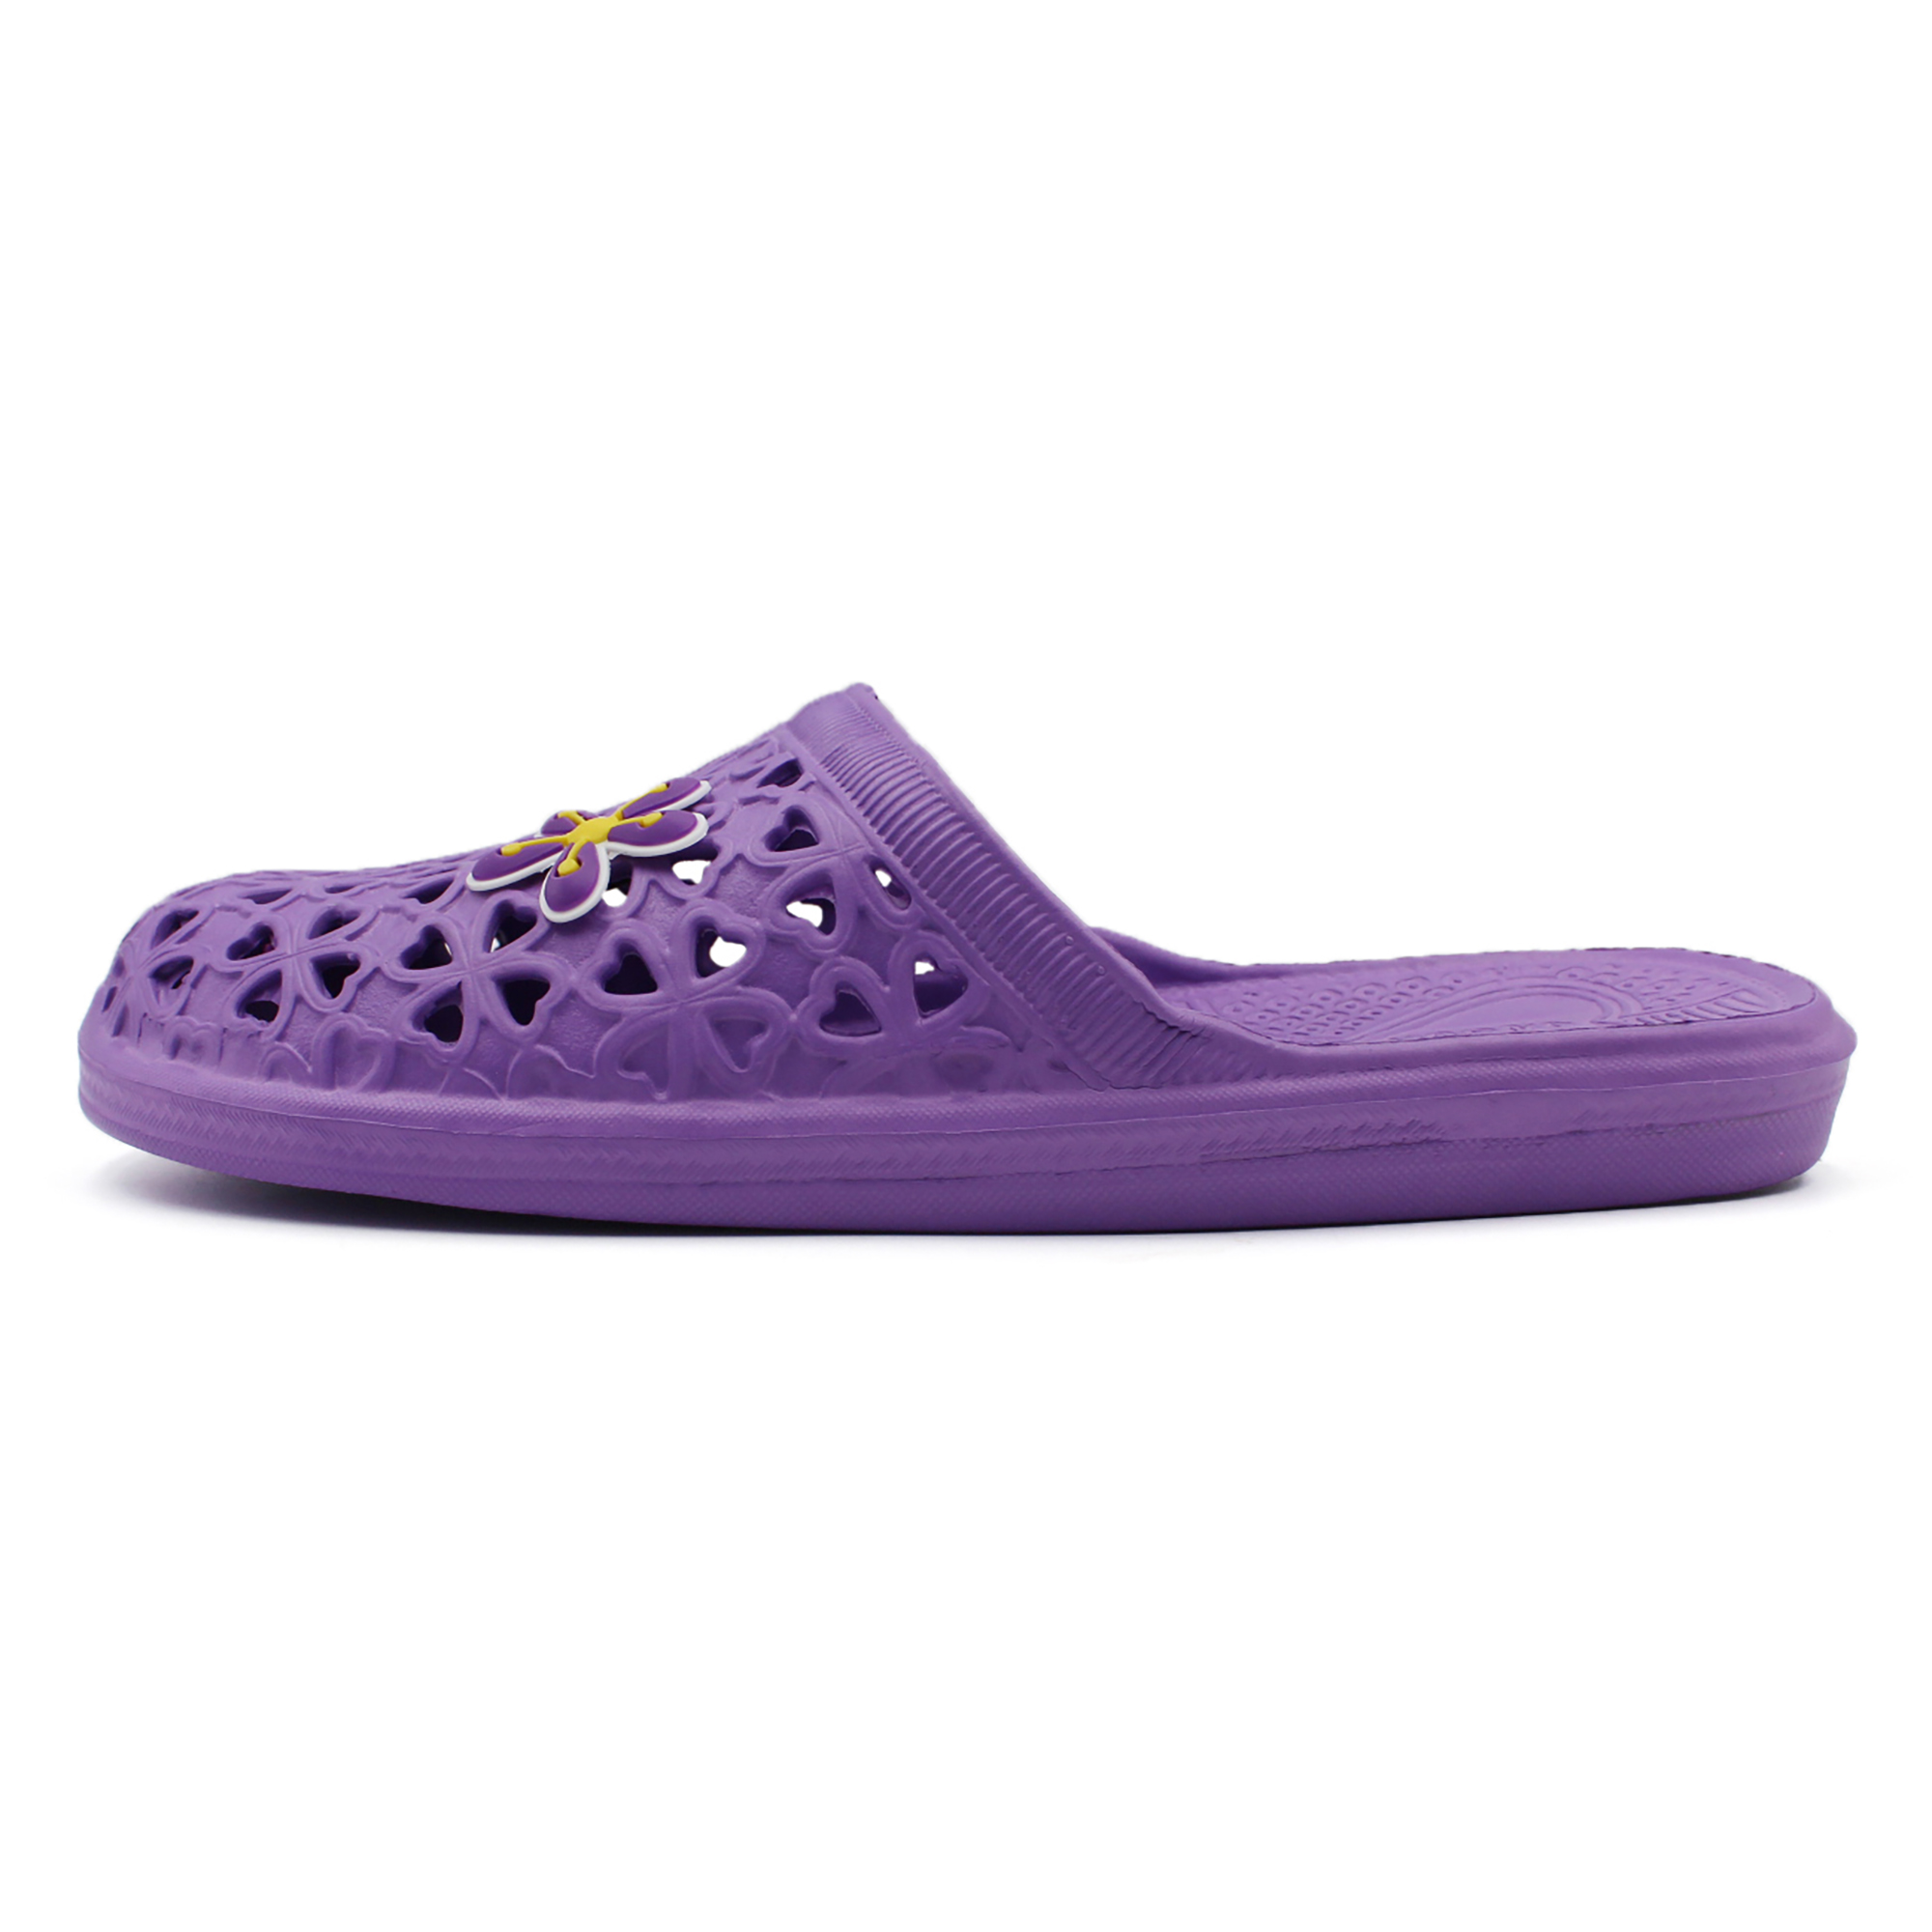 Women's Jelly Sandals Rubber Waterproof Slides Muldes | eBay